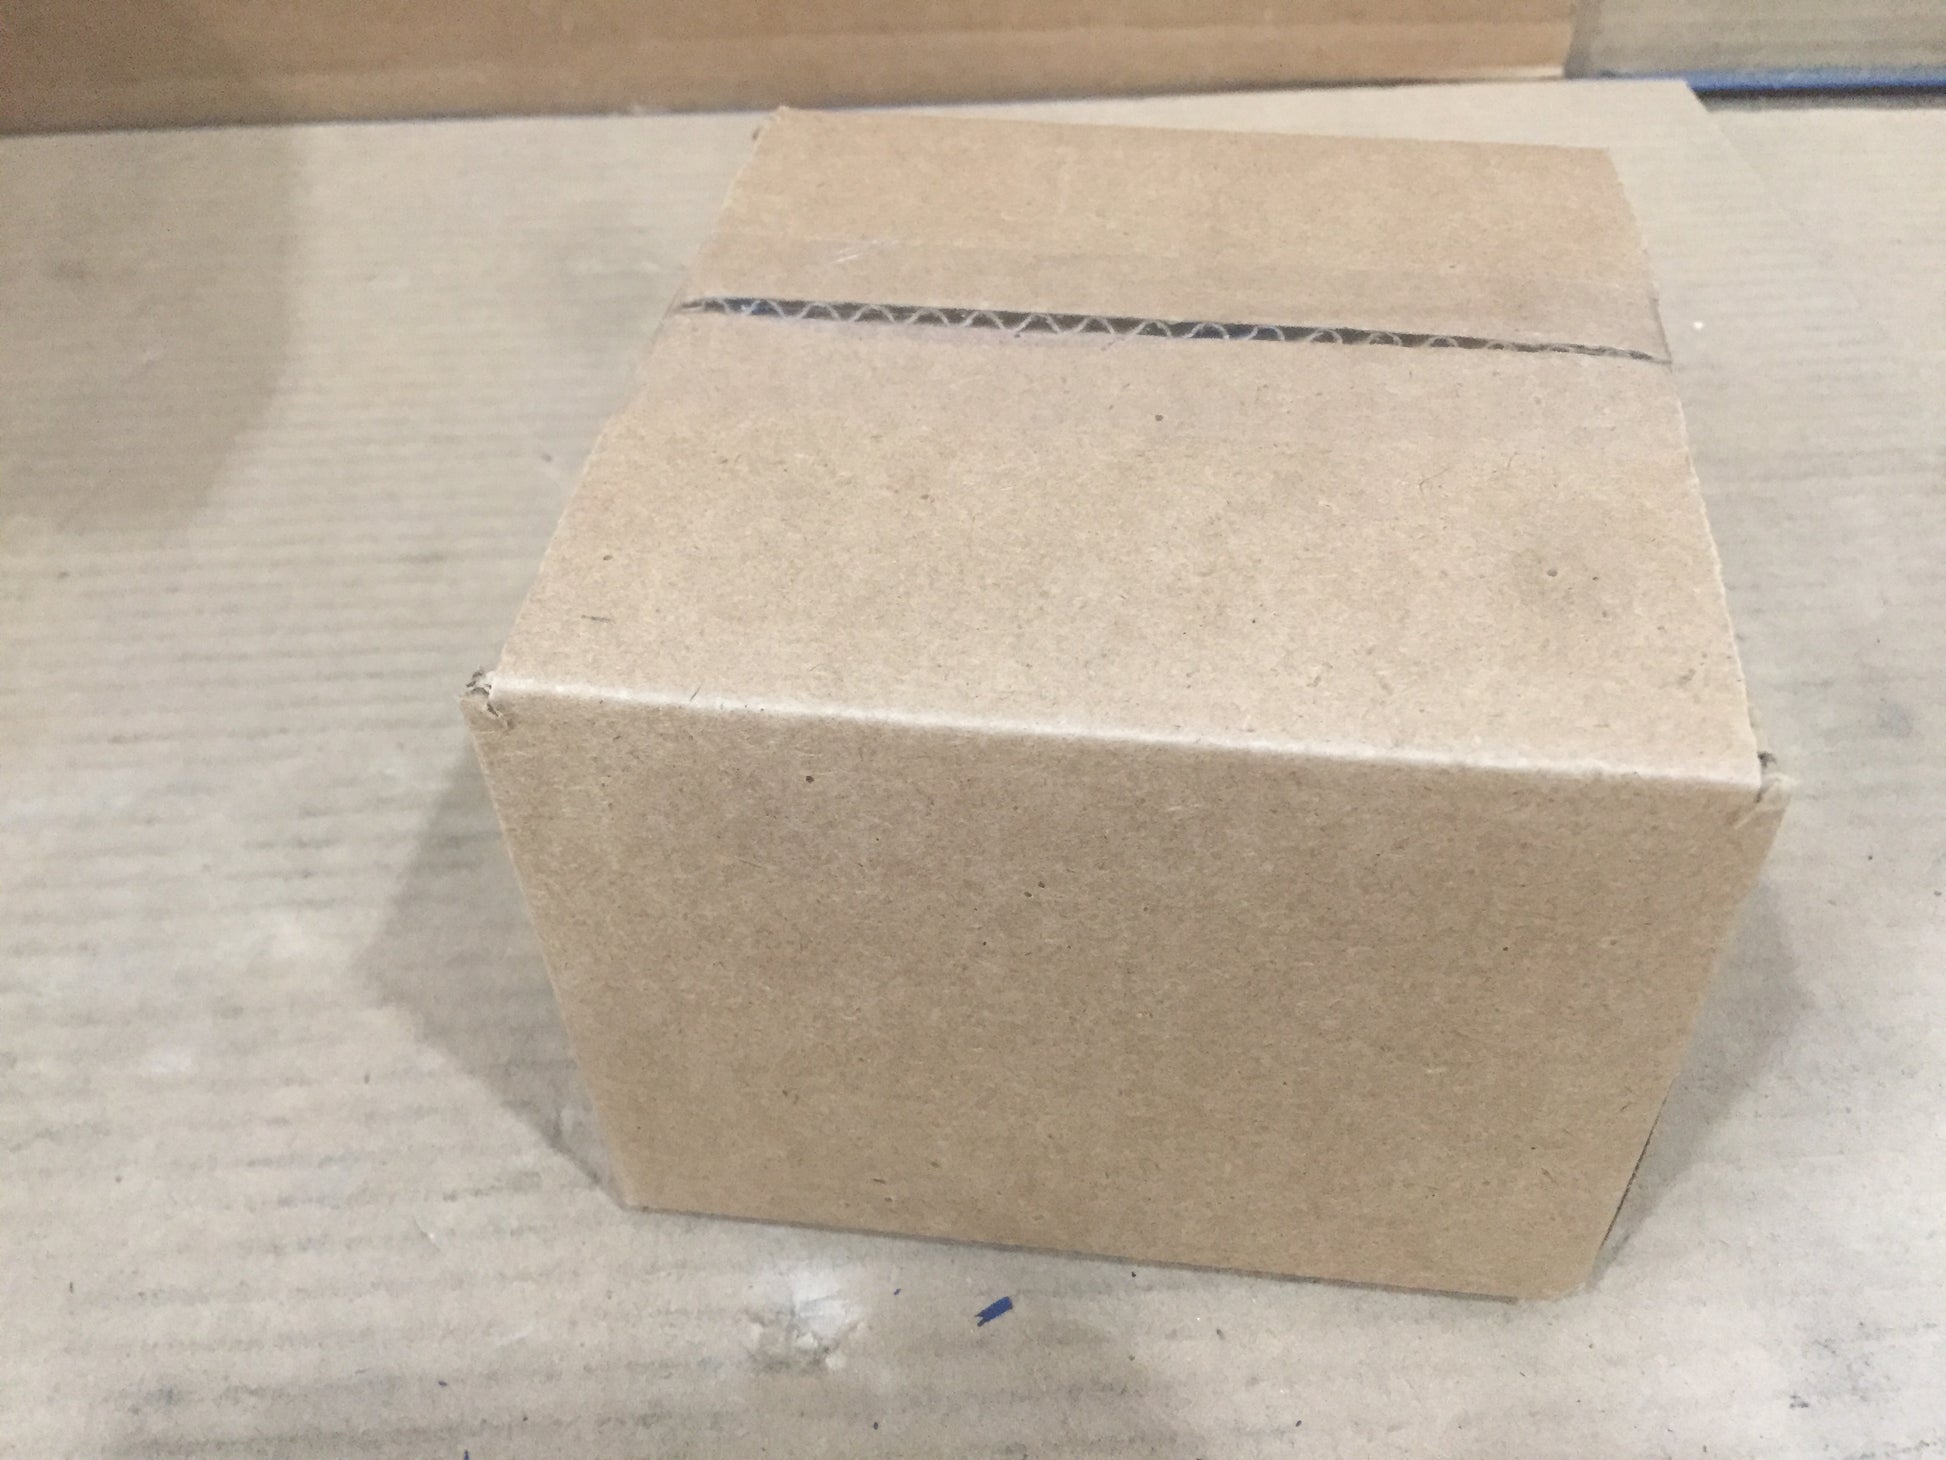 E-PART BOX ASSEMBLY PLATE